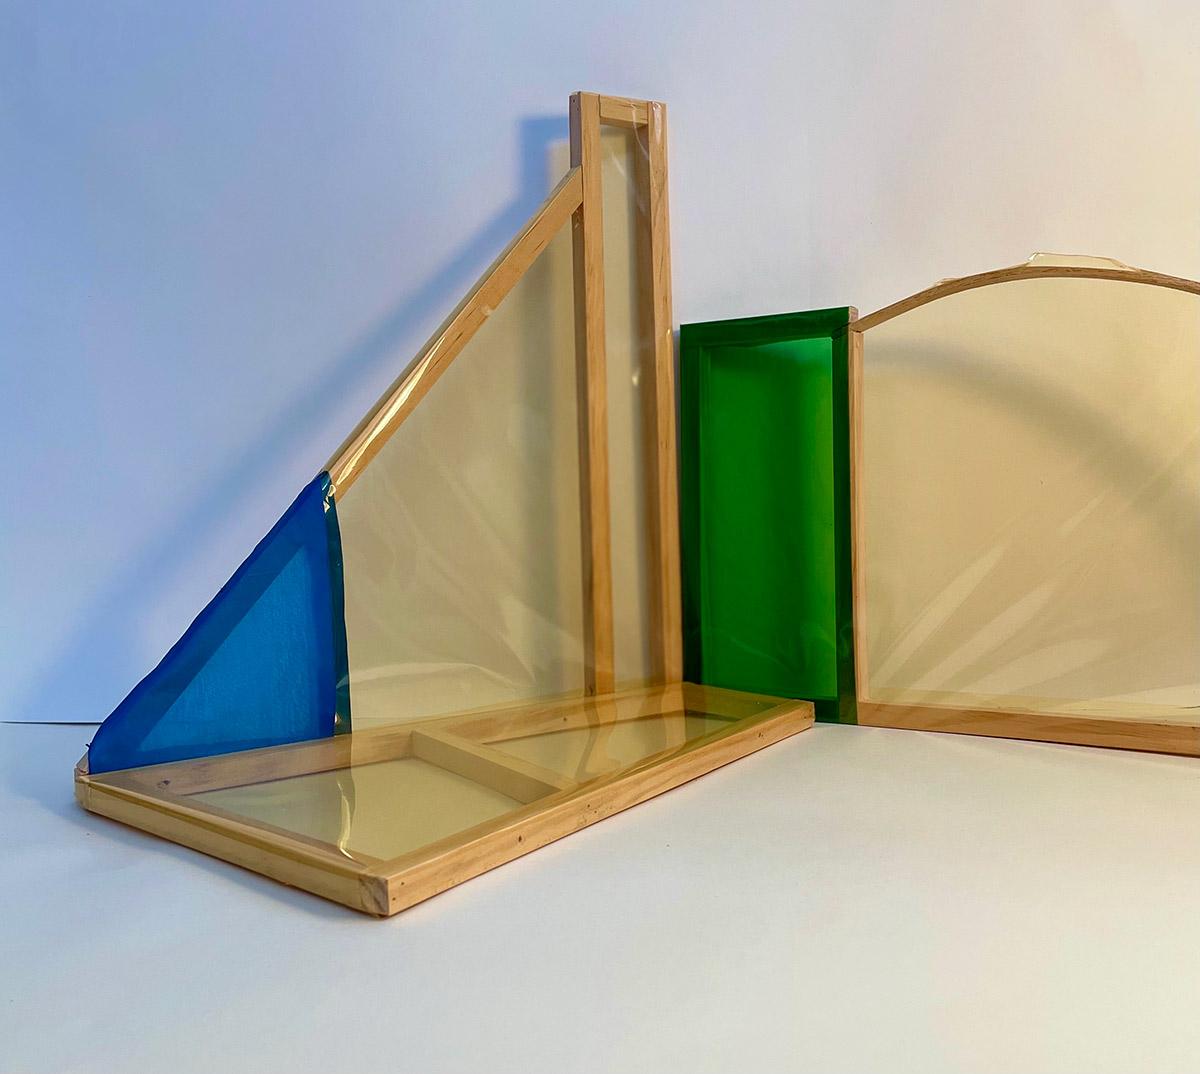 three dimensional geometric shapes in wood and plastic film